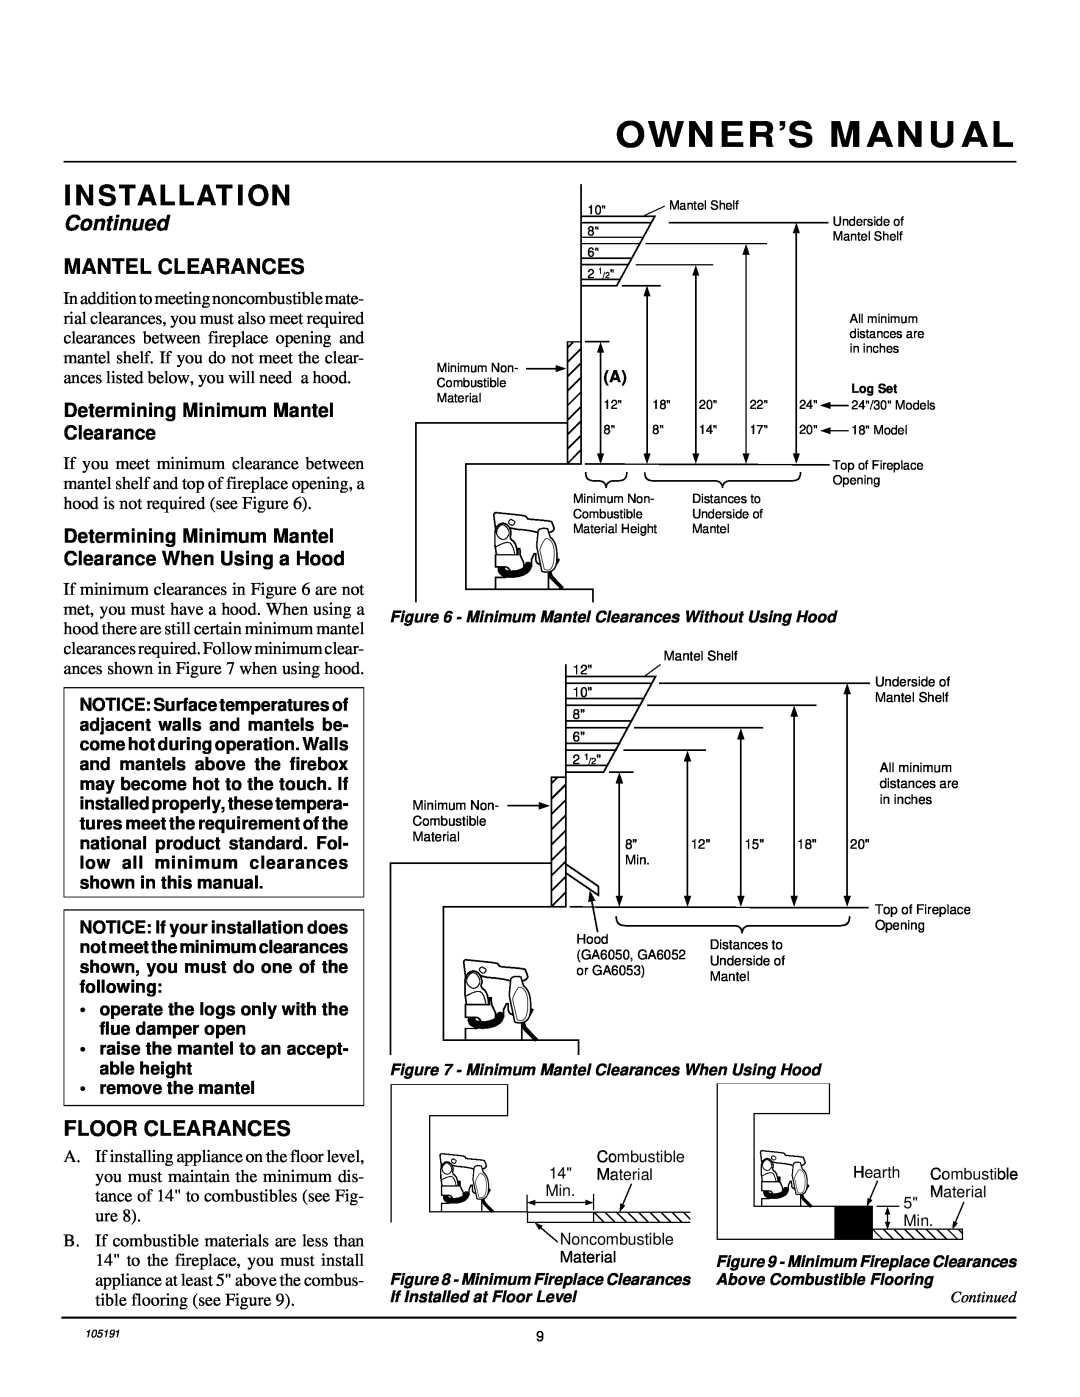 Desa FVF30N installation manual Mantel Clearances, Floor Clearances, Owner’S Manual, Installation, Continued 